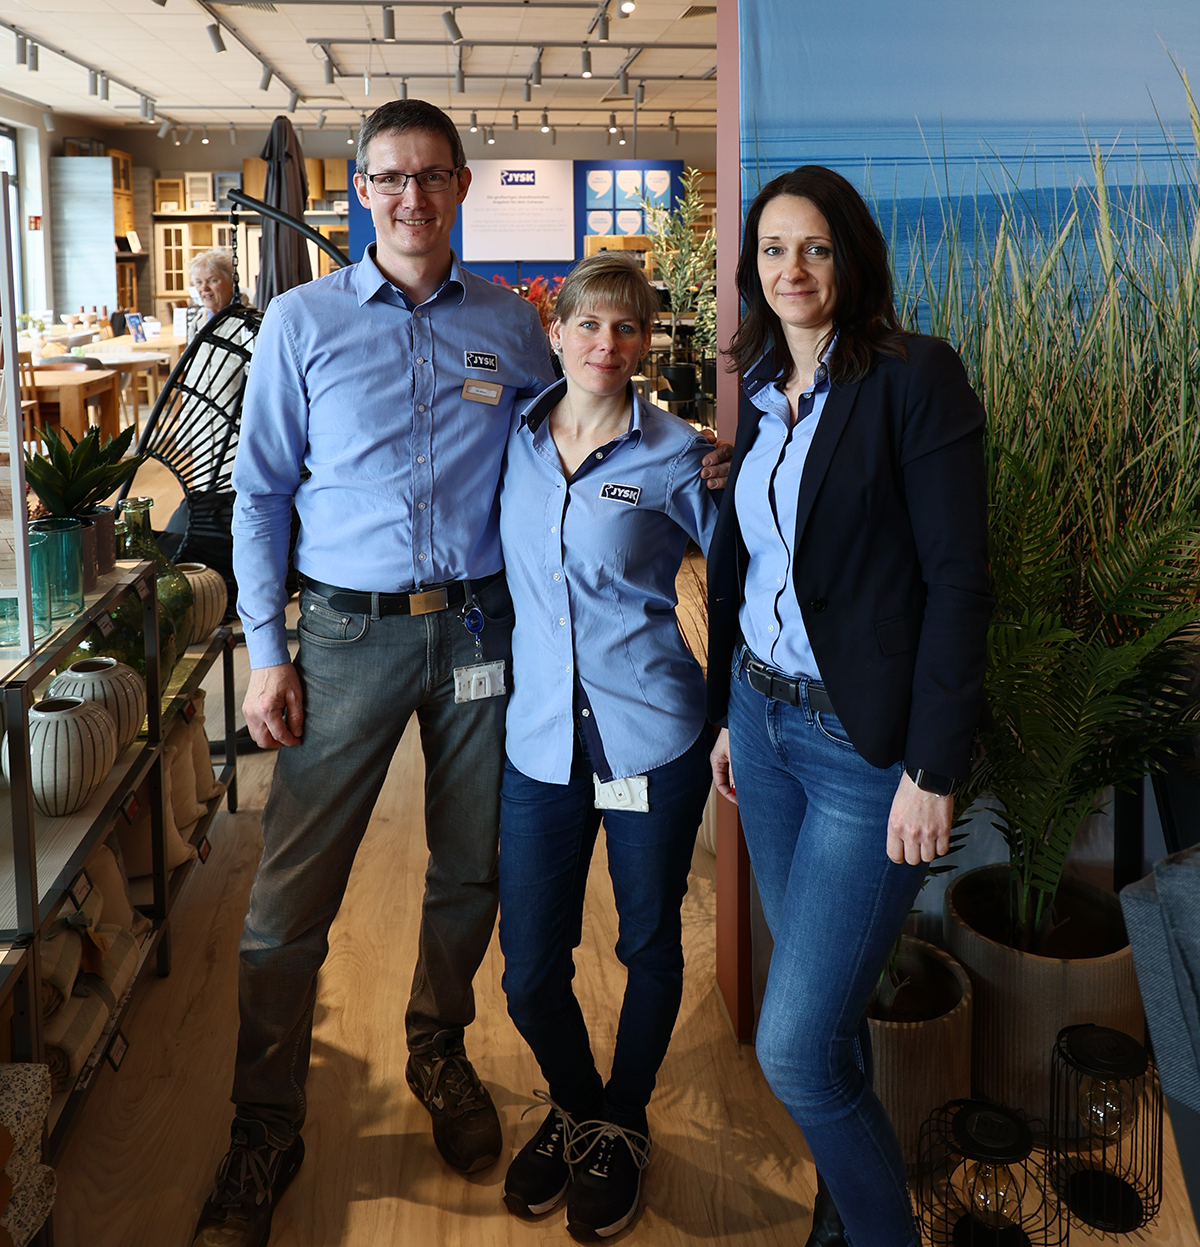 Starkes team: Mandy mit Store Manager Olaf und District Manager Sandy